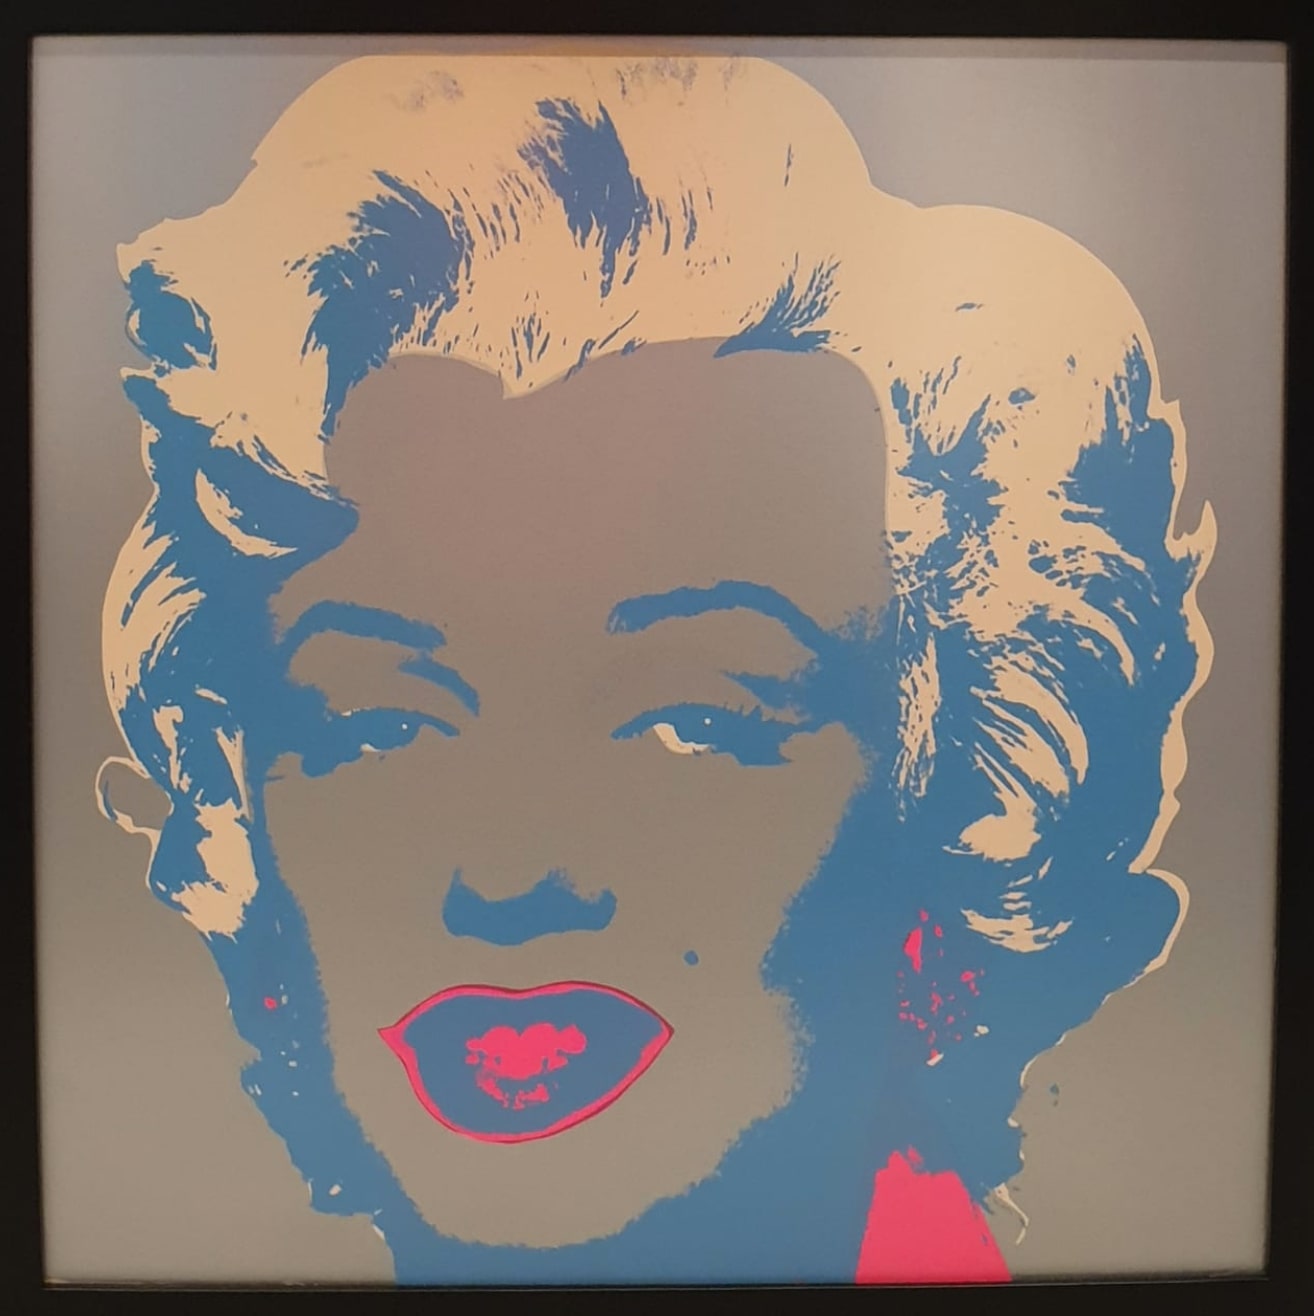 Marilyn Monroe by Andy Warhol as shown in Capital Club